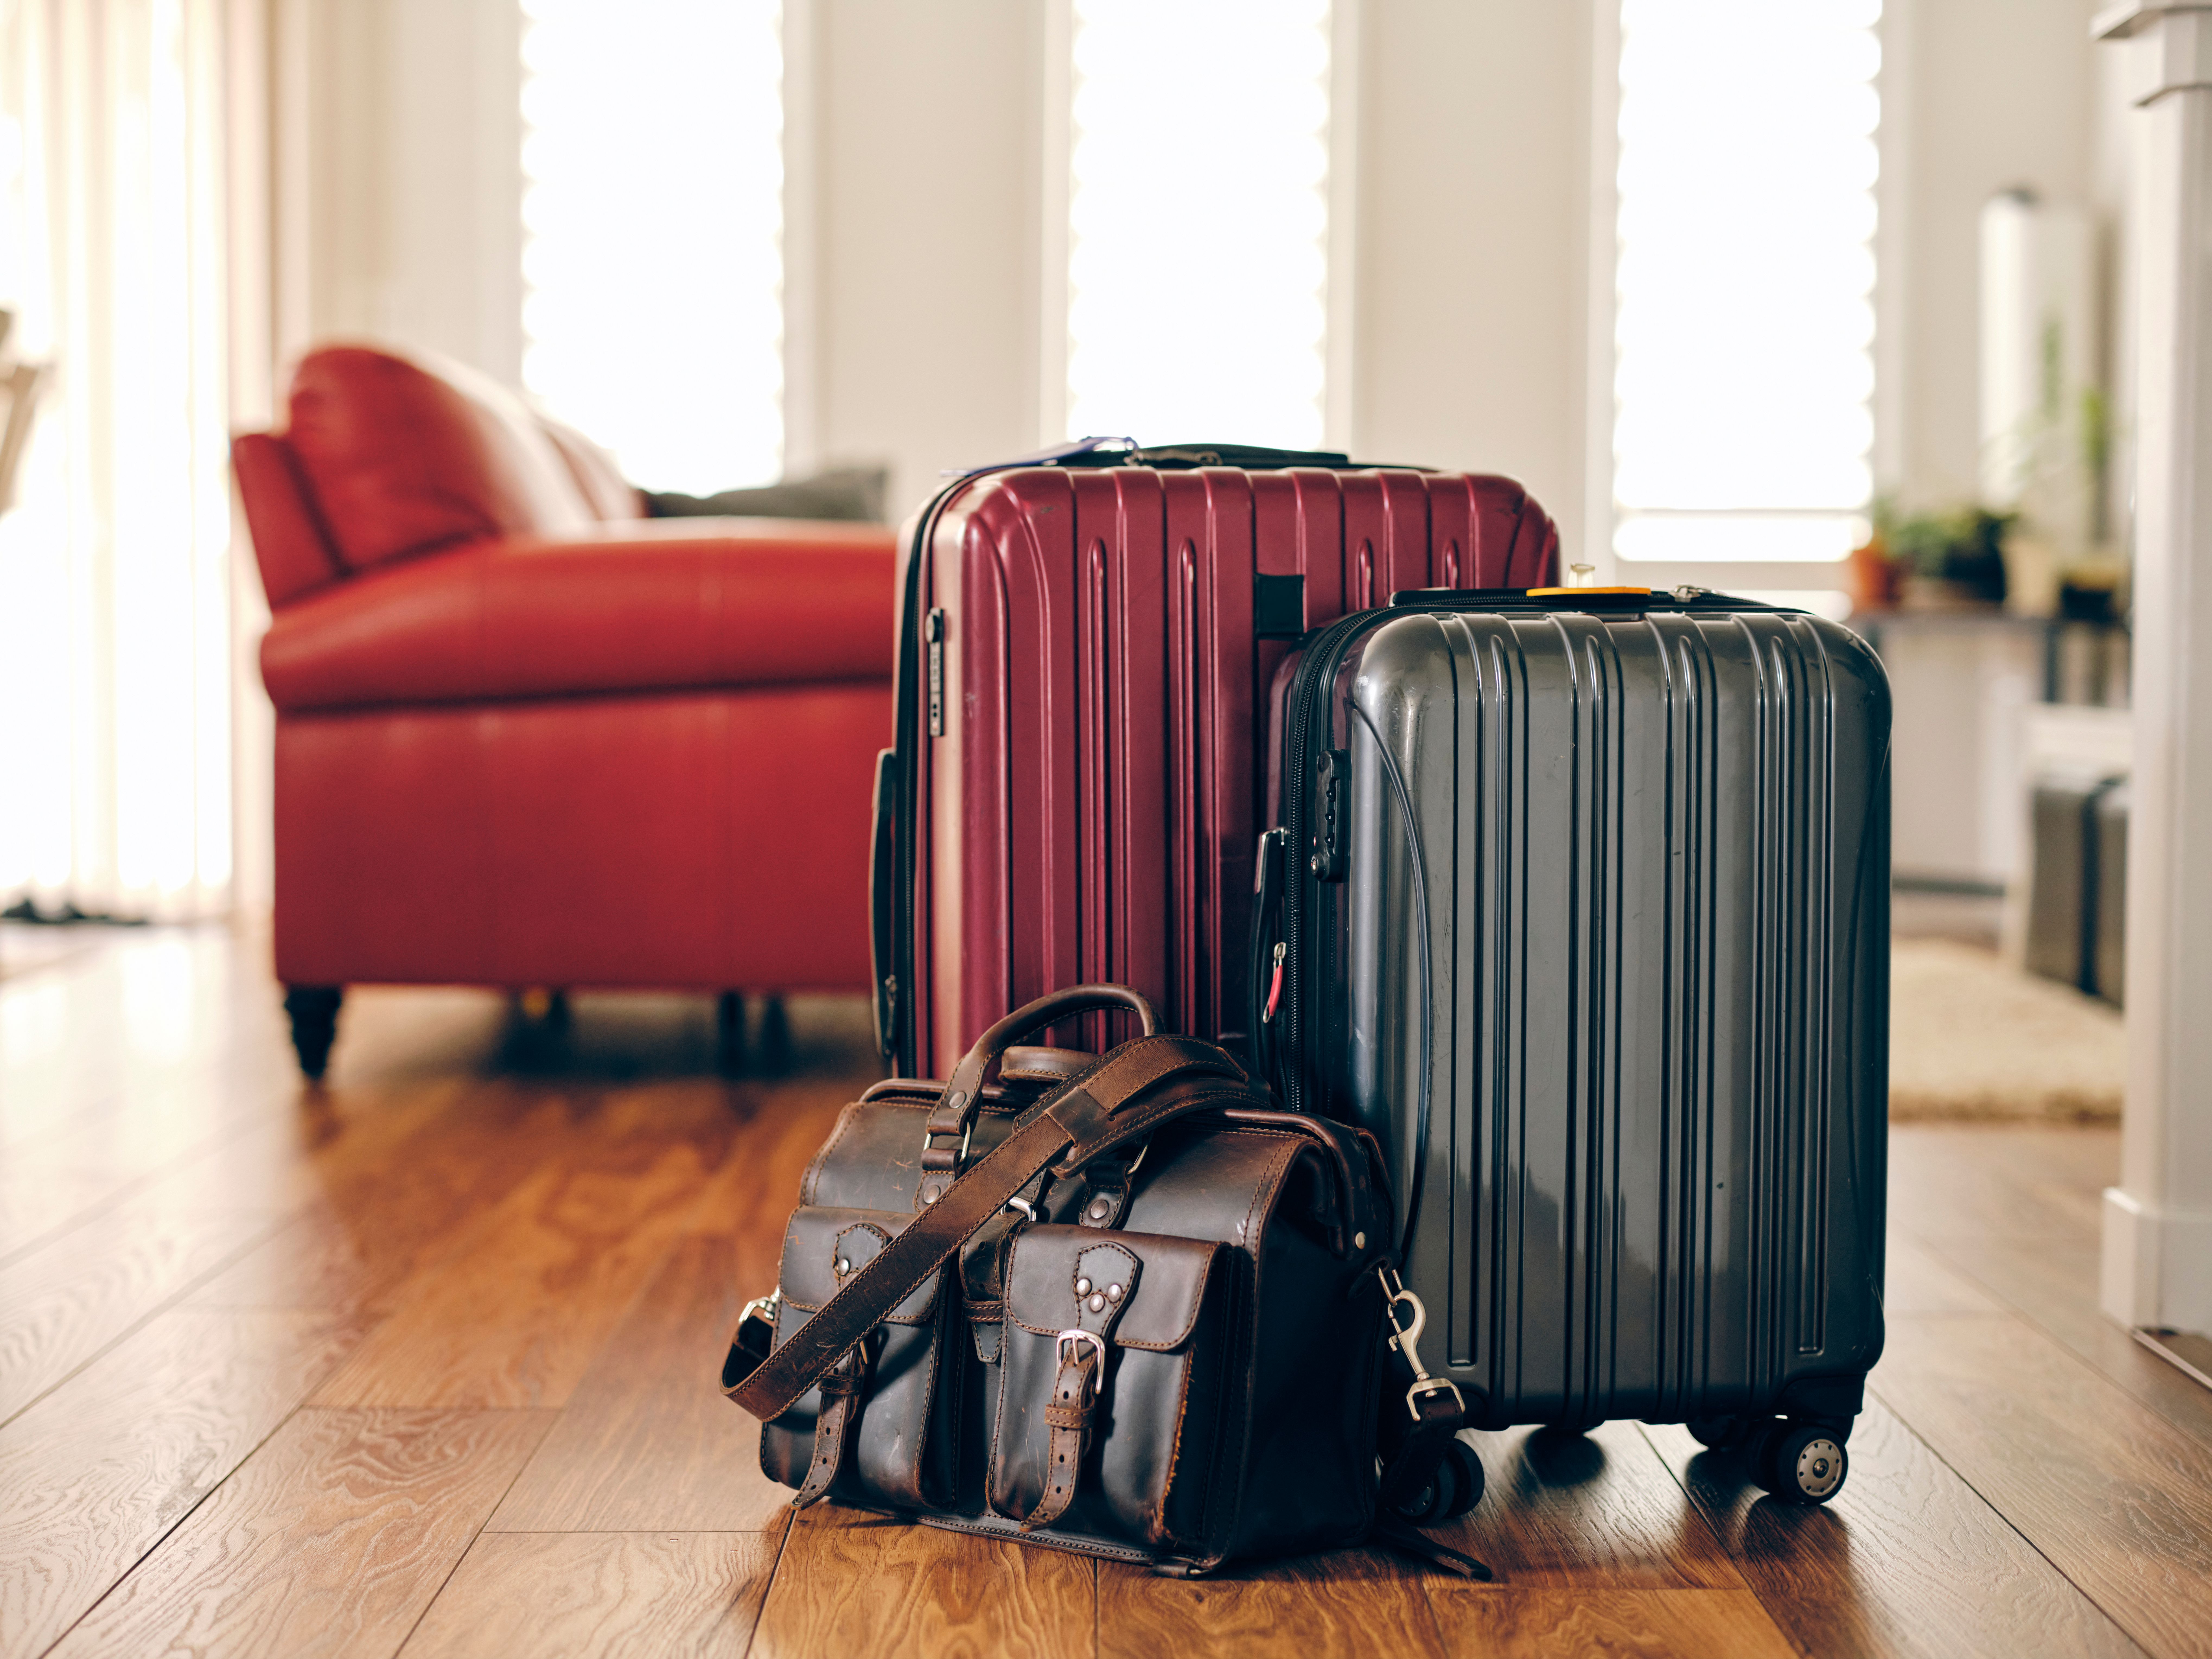 Delta introduces innovative baggage tracking process | Delta News Hub